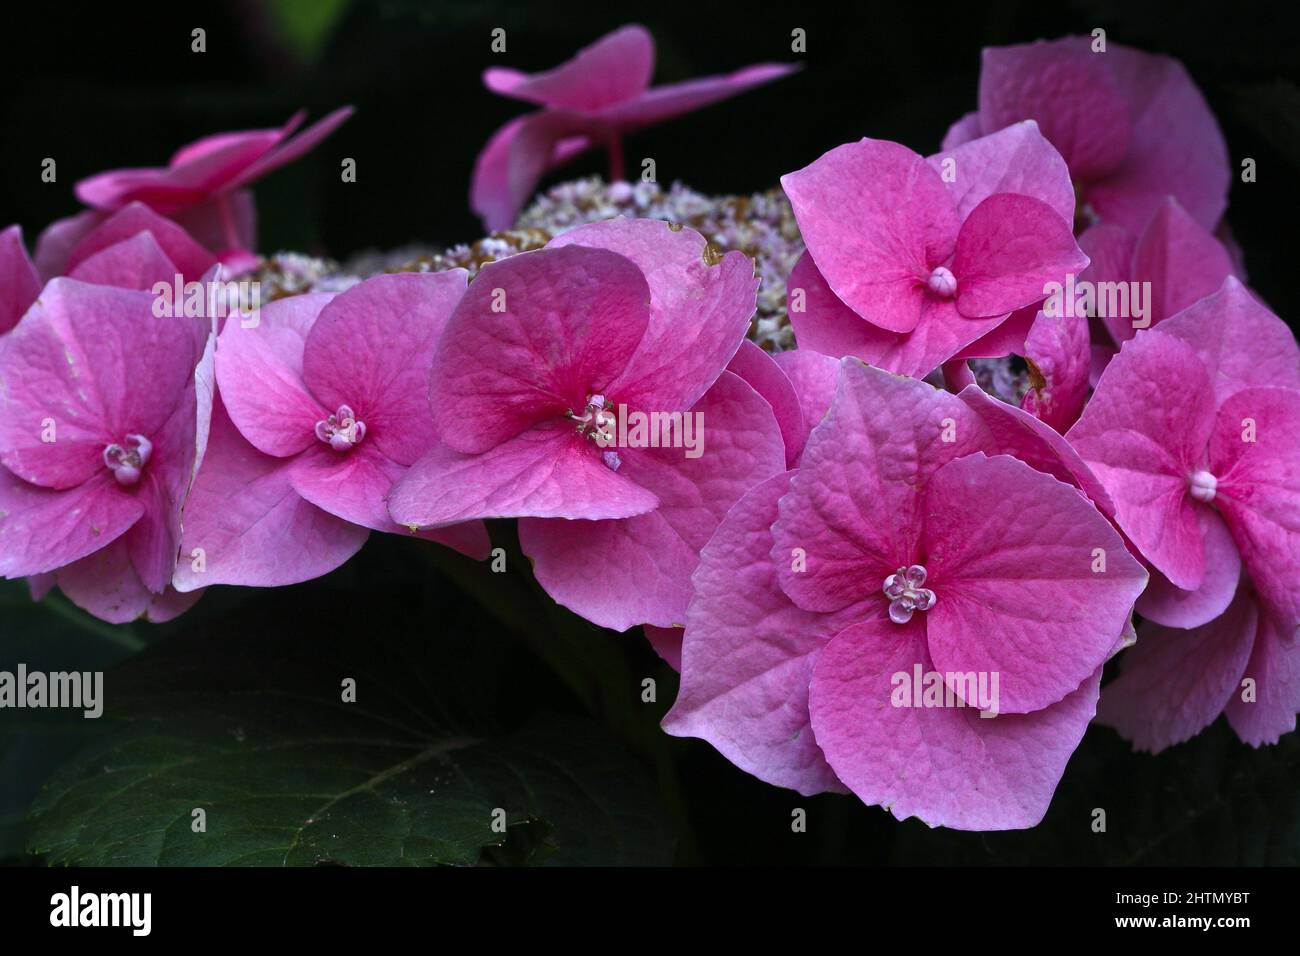 PINK LACECAP HYDRANGEA FLOWER Stock Photo